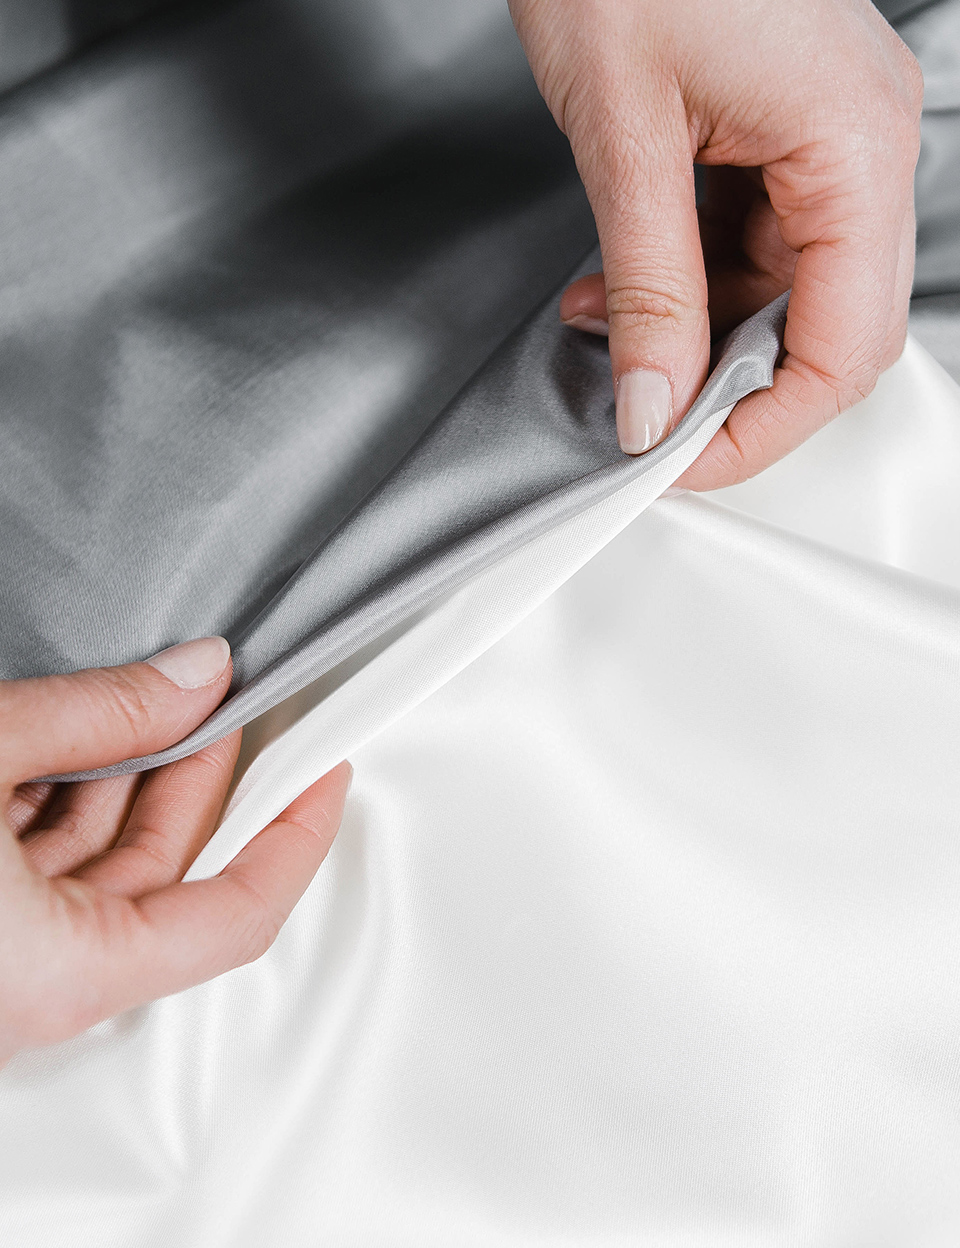 Folding gray and white flou fabric